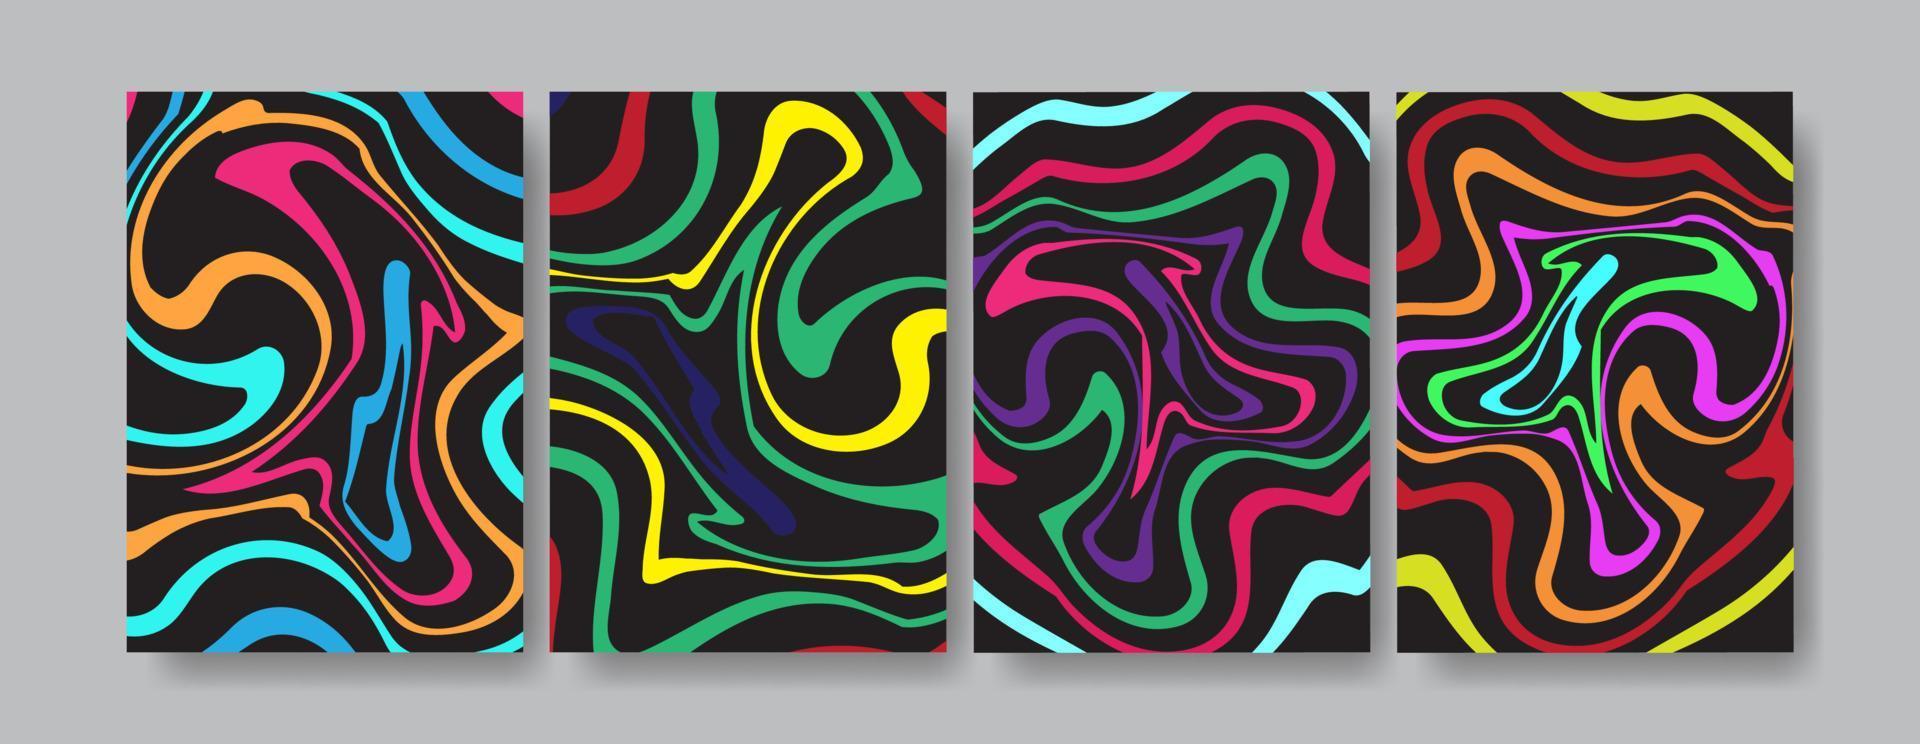 Colorful Wave Background Template Design For Poster Design, Flyer, And Design Promotion vector